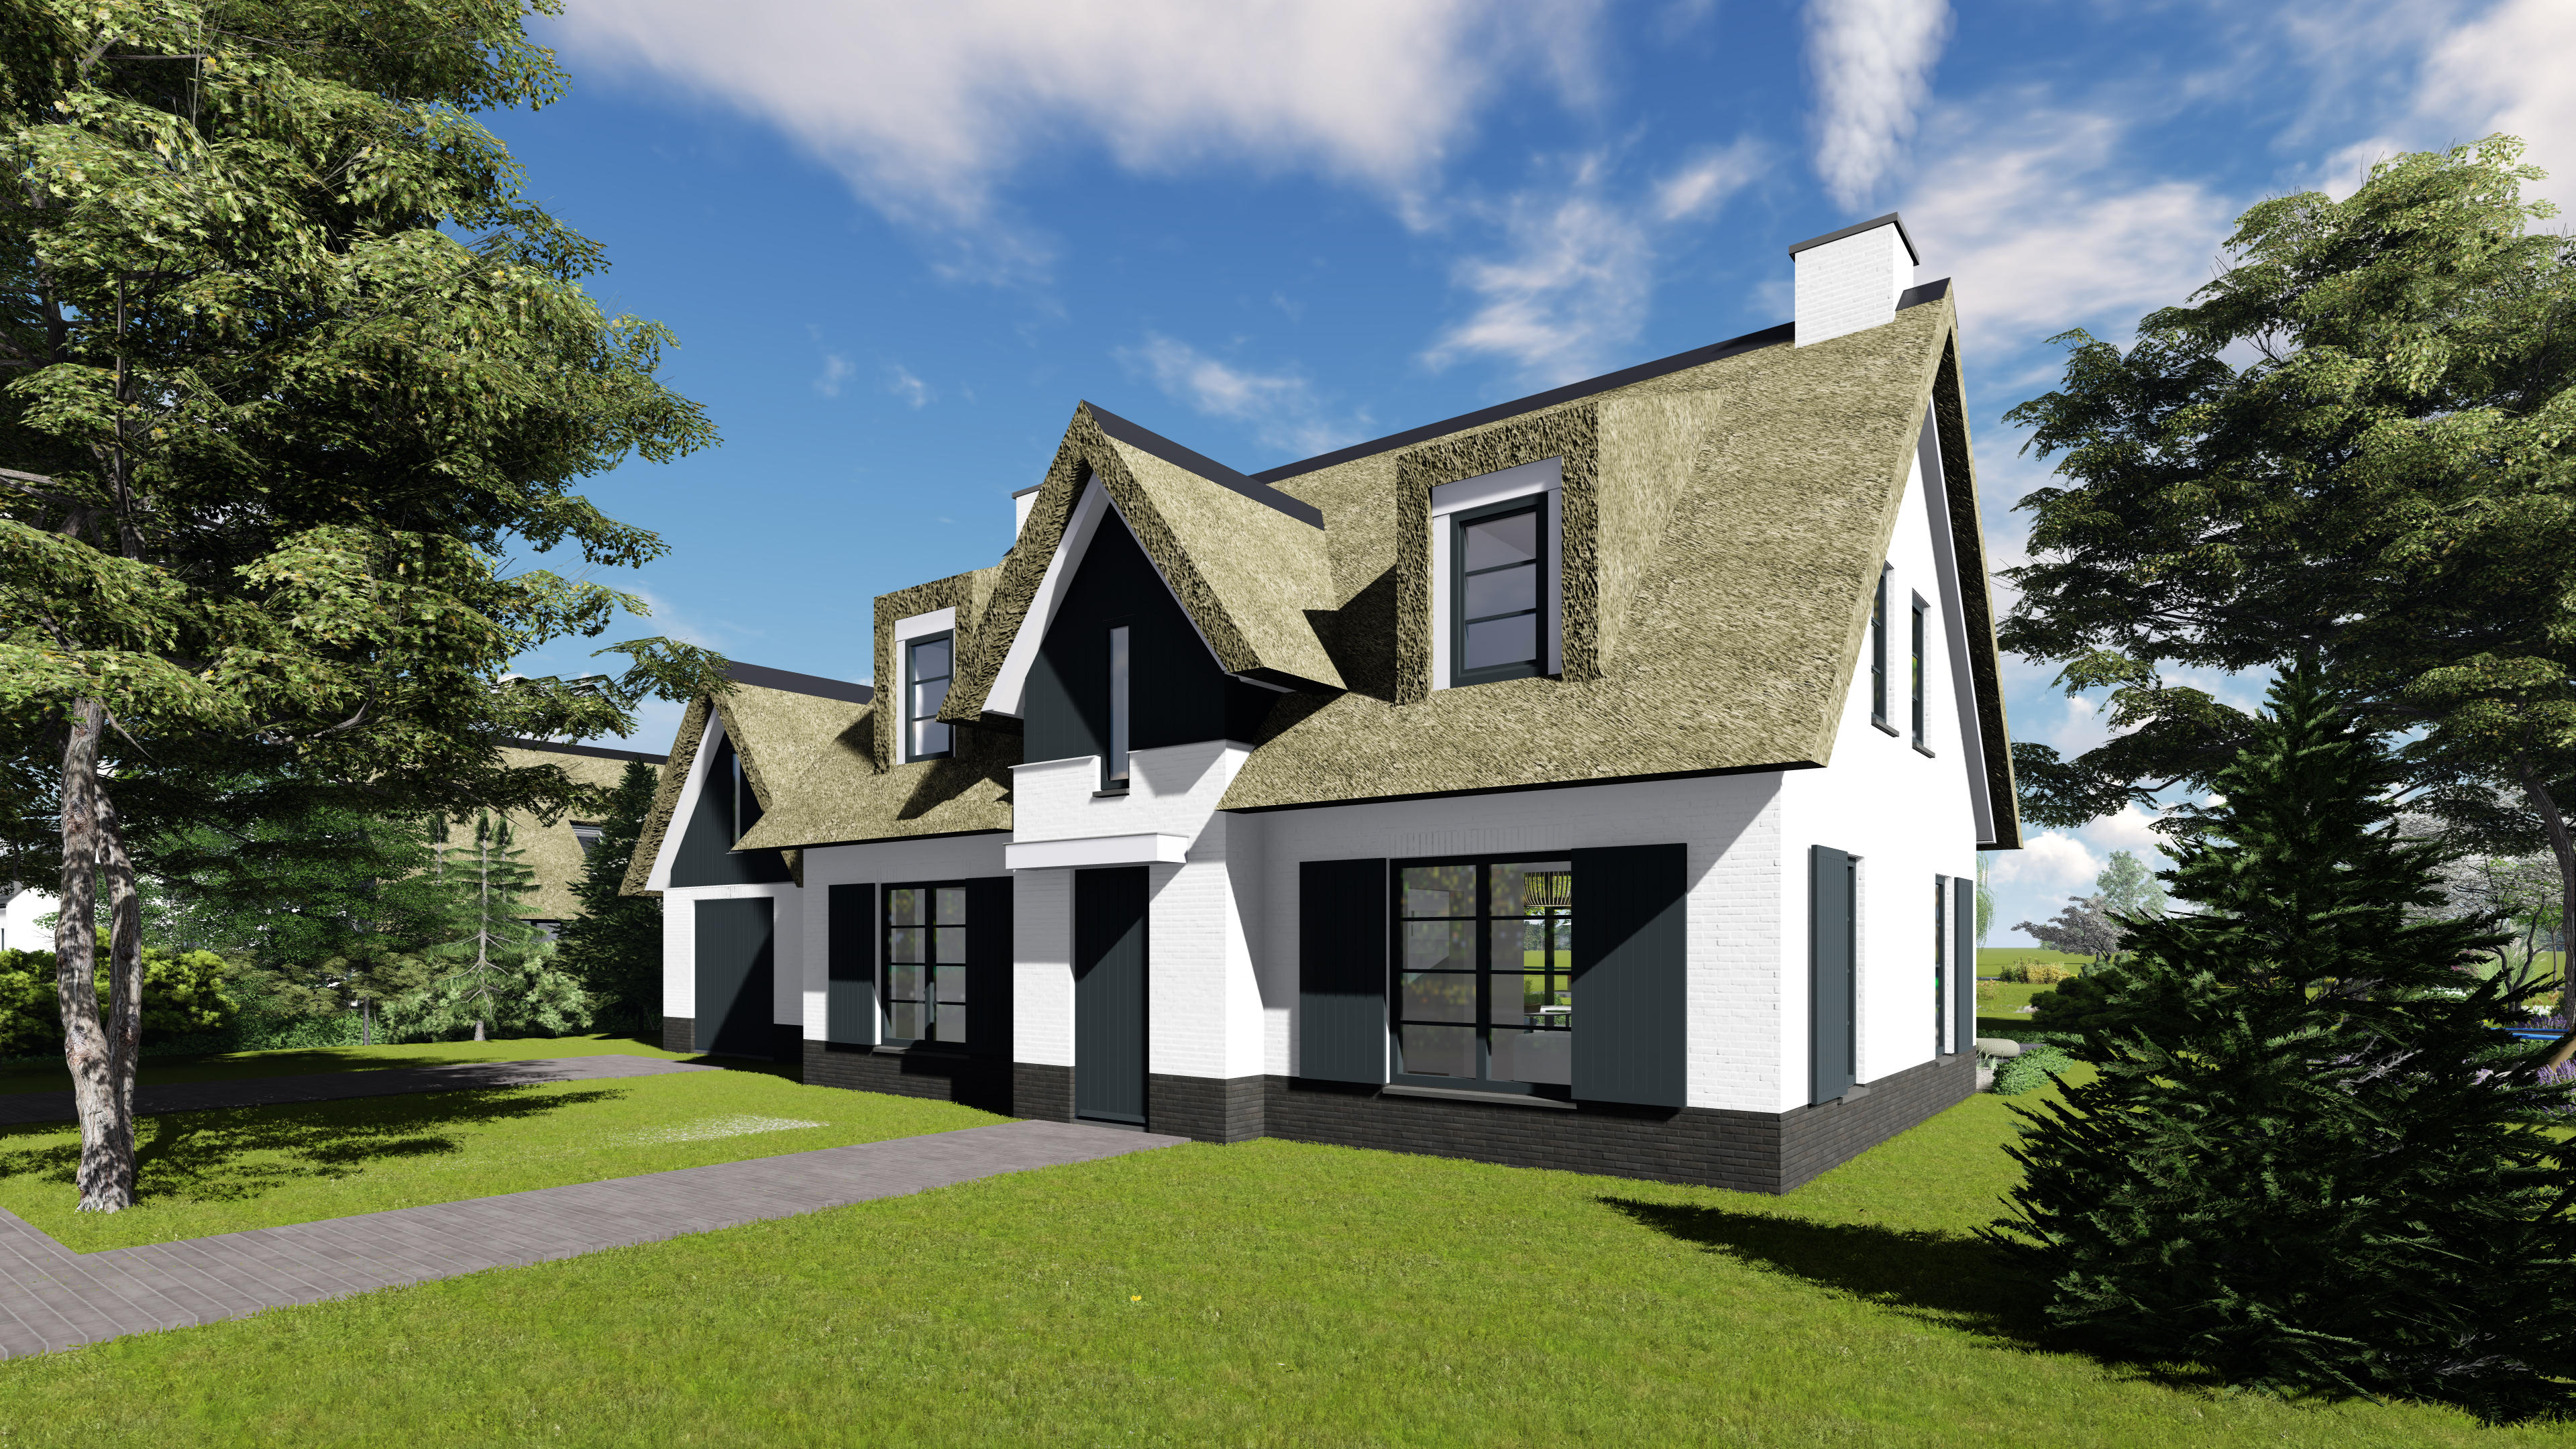 korenweide - Huis bouwen - Livingstone villabouw